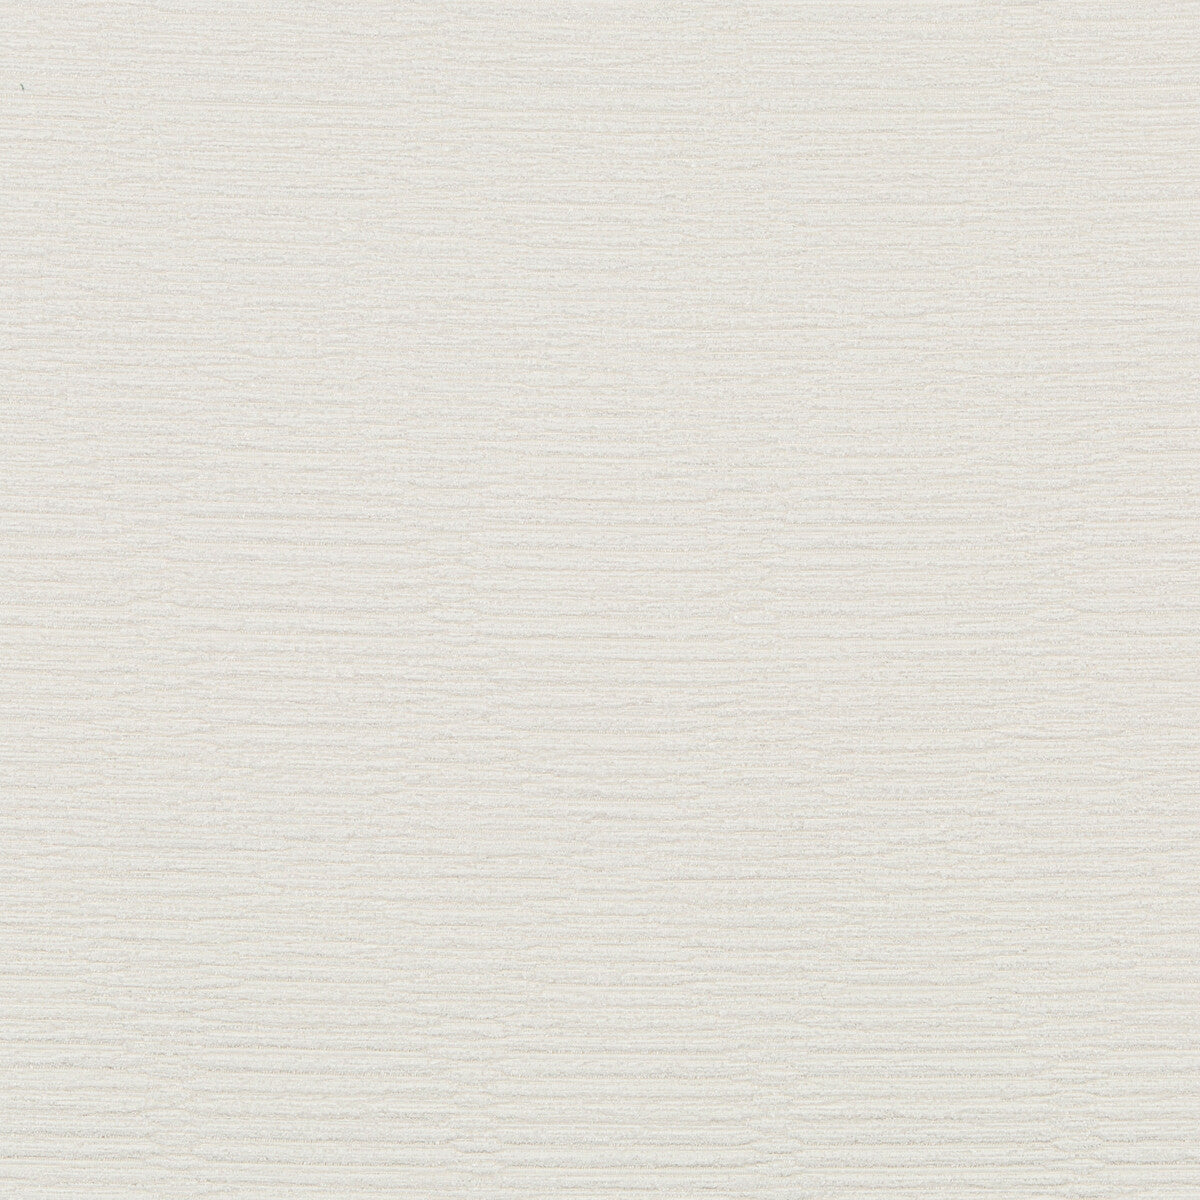 Kravet Smart fabric in 35954-101 color - pattern 35954.101.0 - by Kravet Smart in the Performance Kravetarmor collection